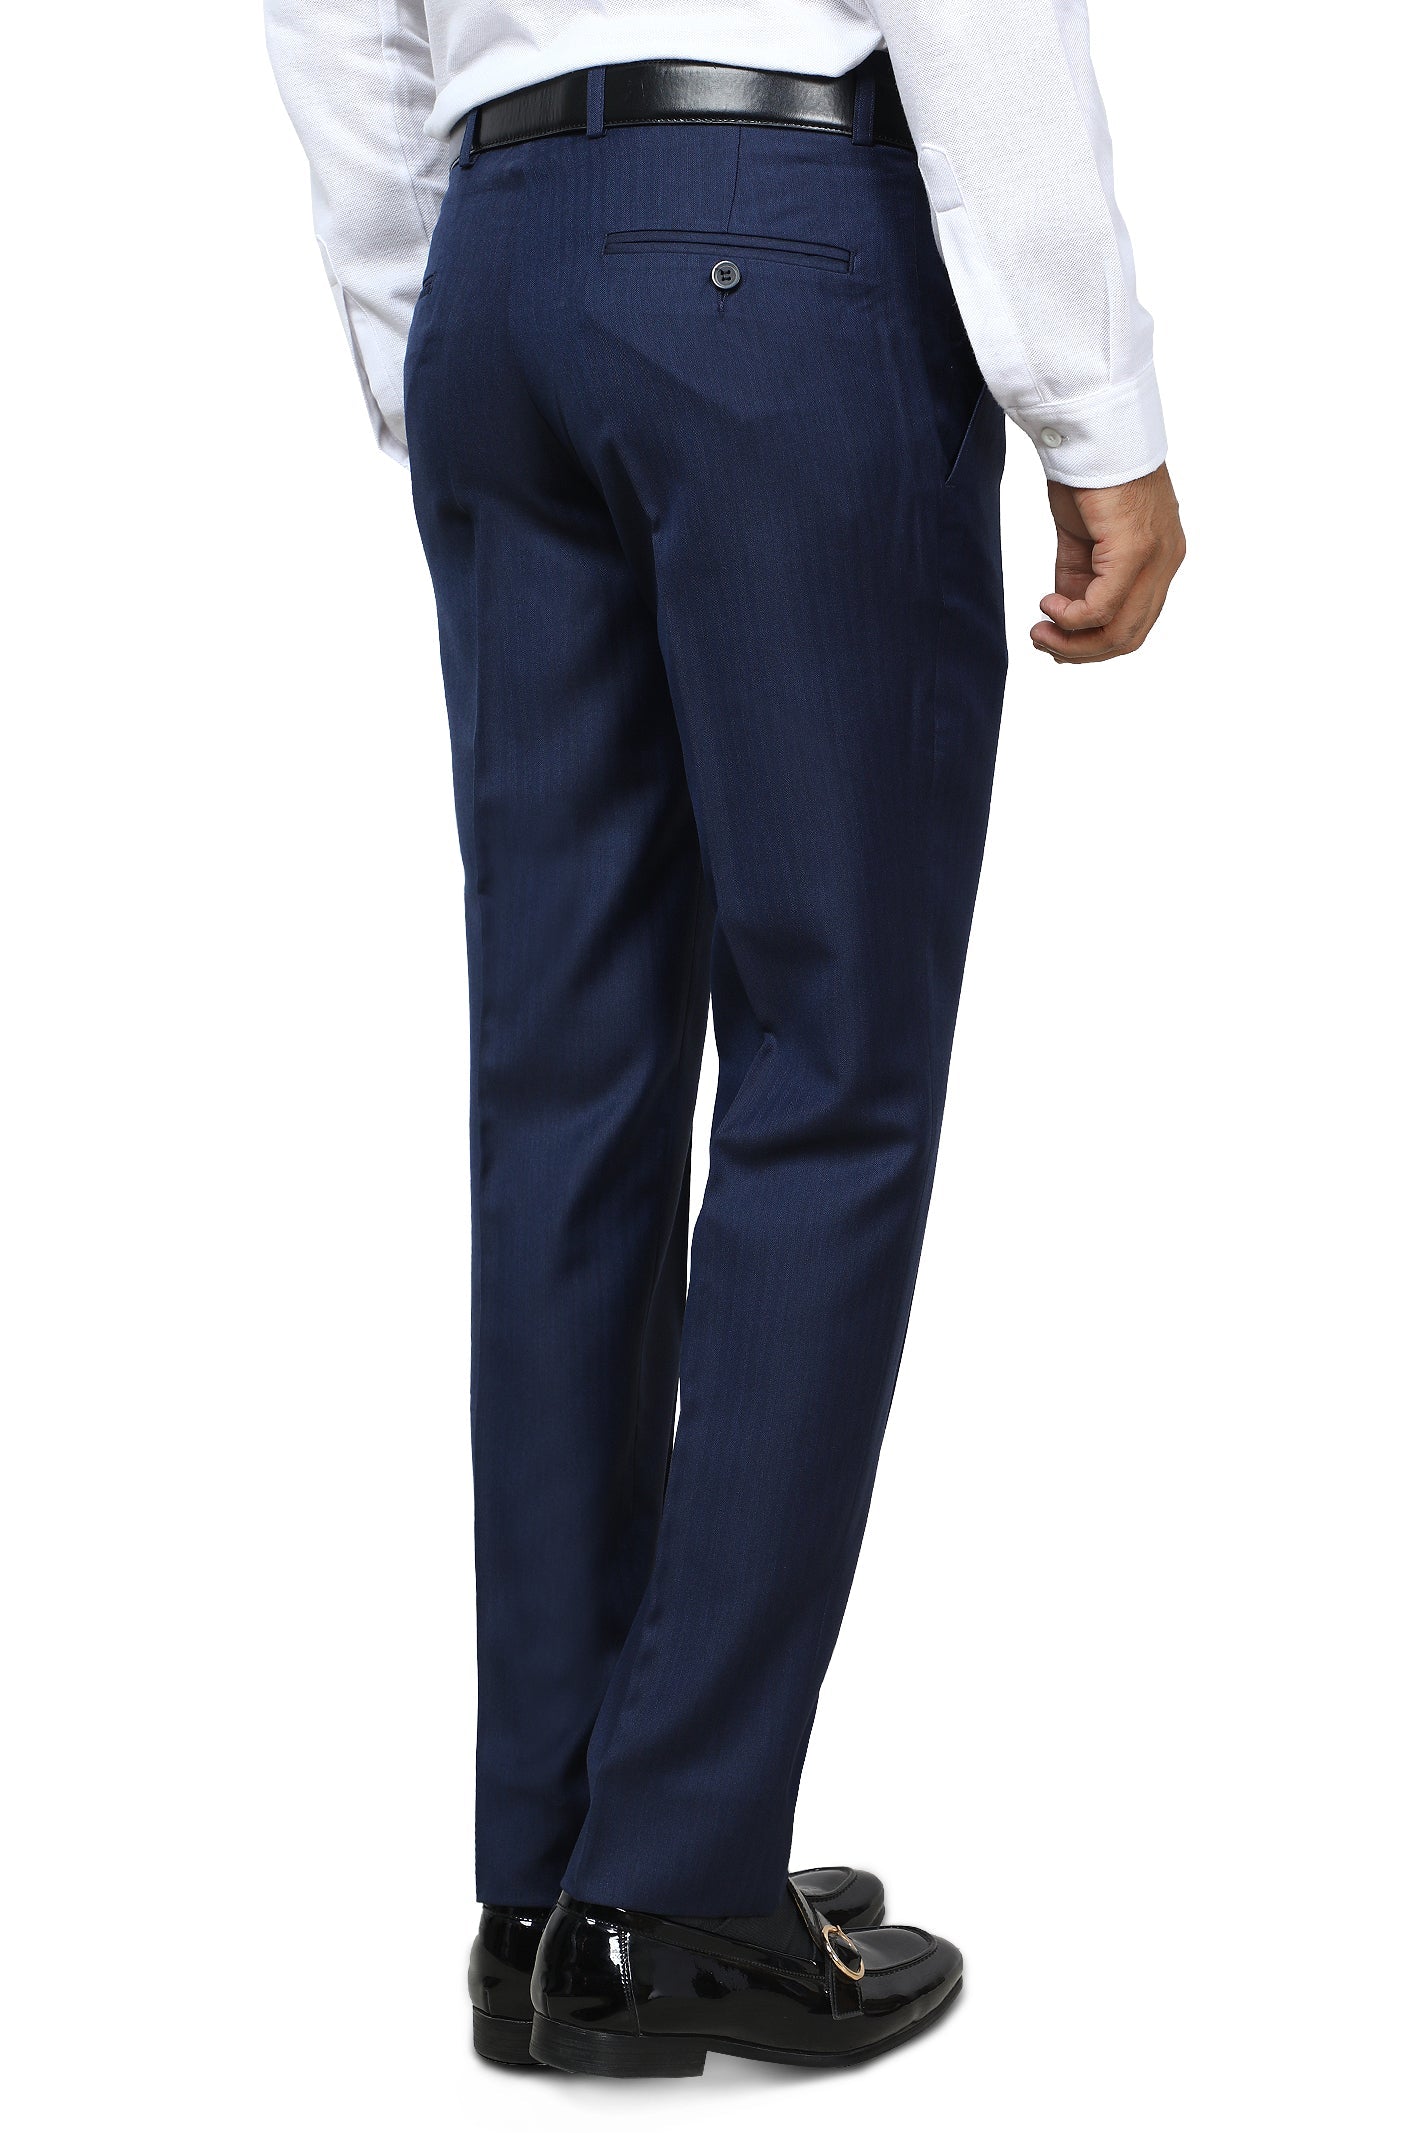 Formal Trouser for Men's - Diners